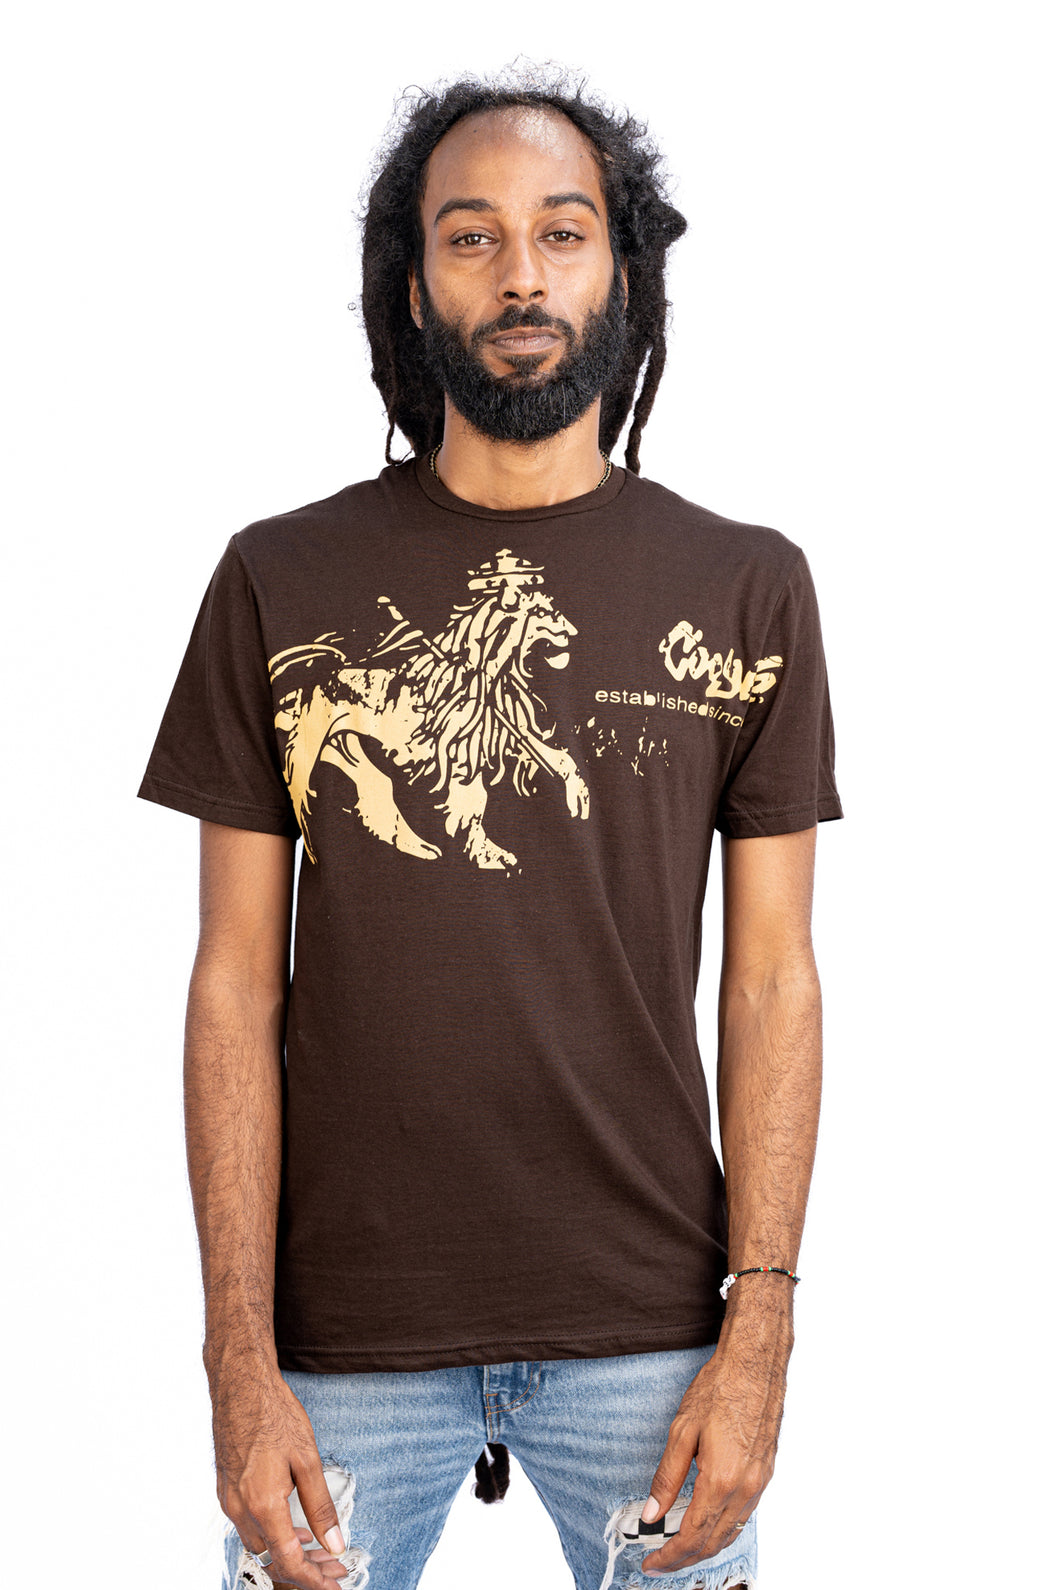 Cooyah Jamaica.  Old World Lion men's rasta tee.  Crew neck, short sleeve, ringspun cotton, brown reggae t-shirt.  Jamaican clothing brand.